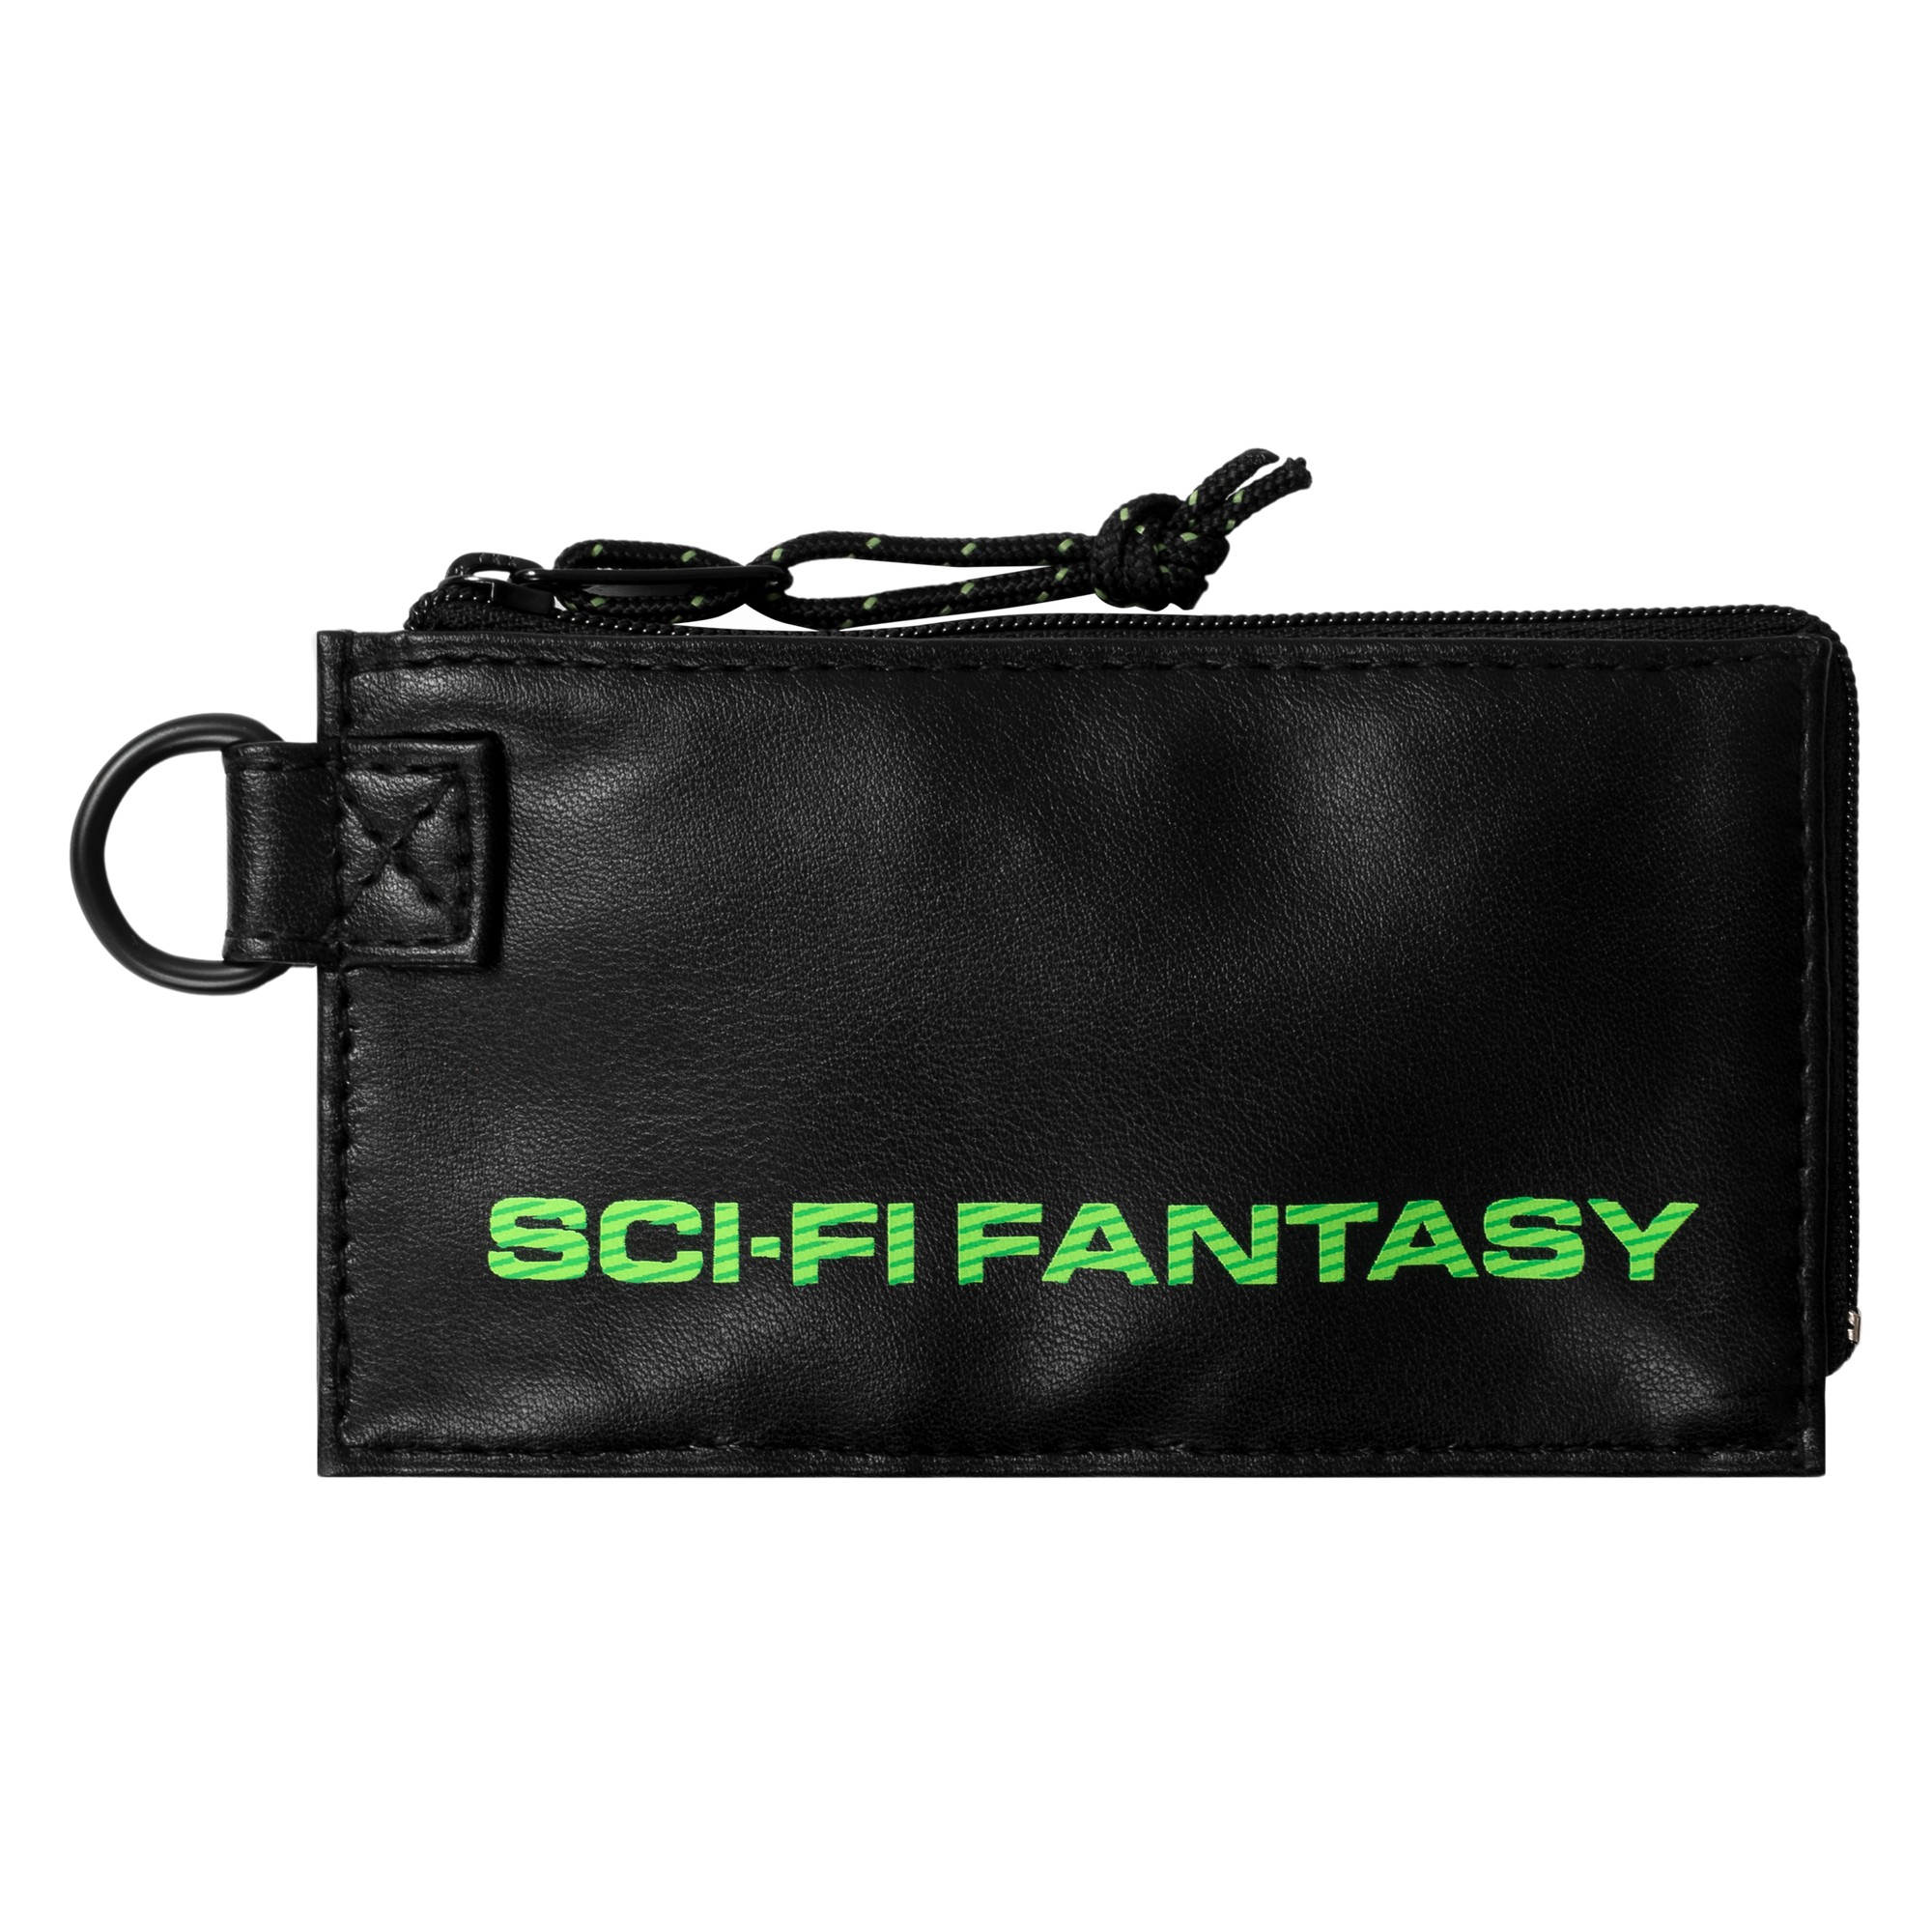 Sci-Fi Fantasy Card Holder Black